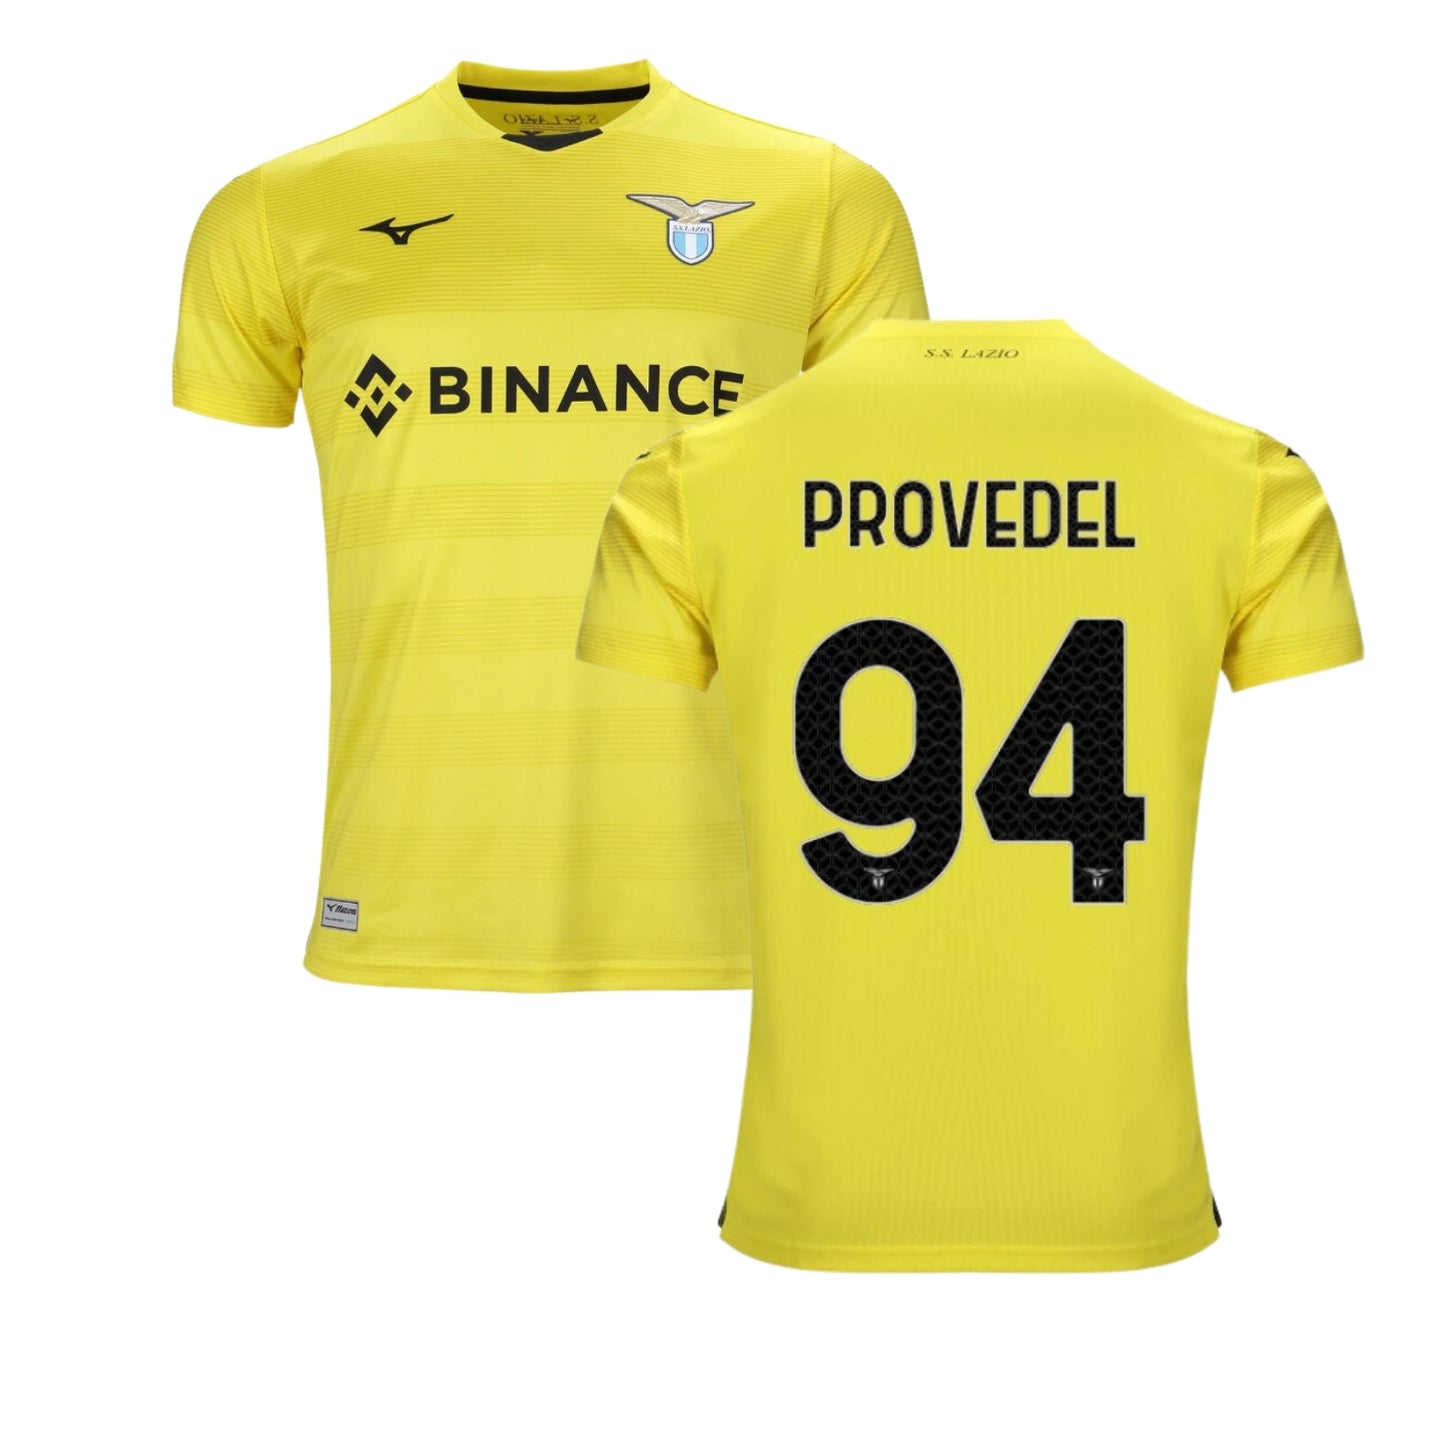 Ivan Provedel Napoli 94 Jersey